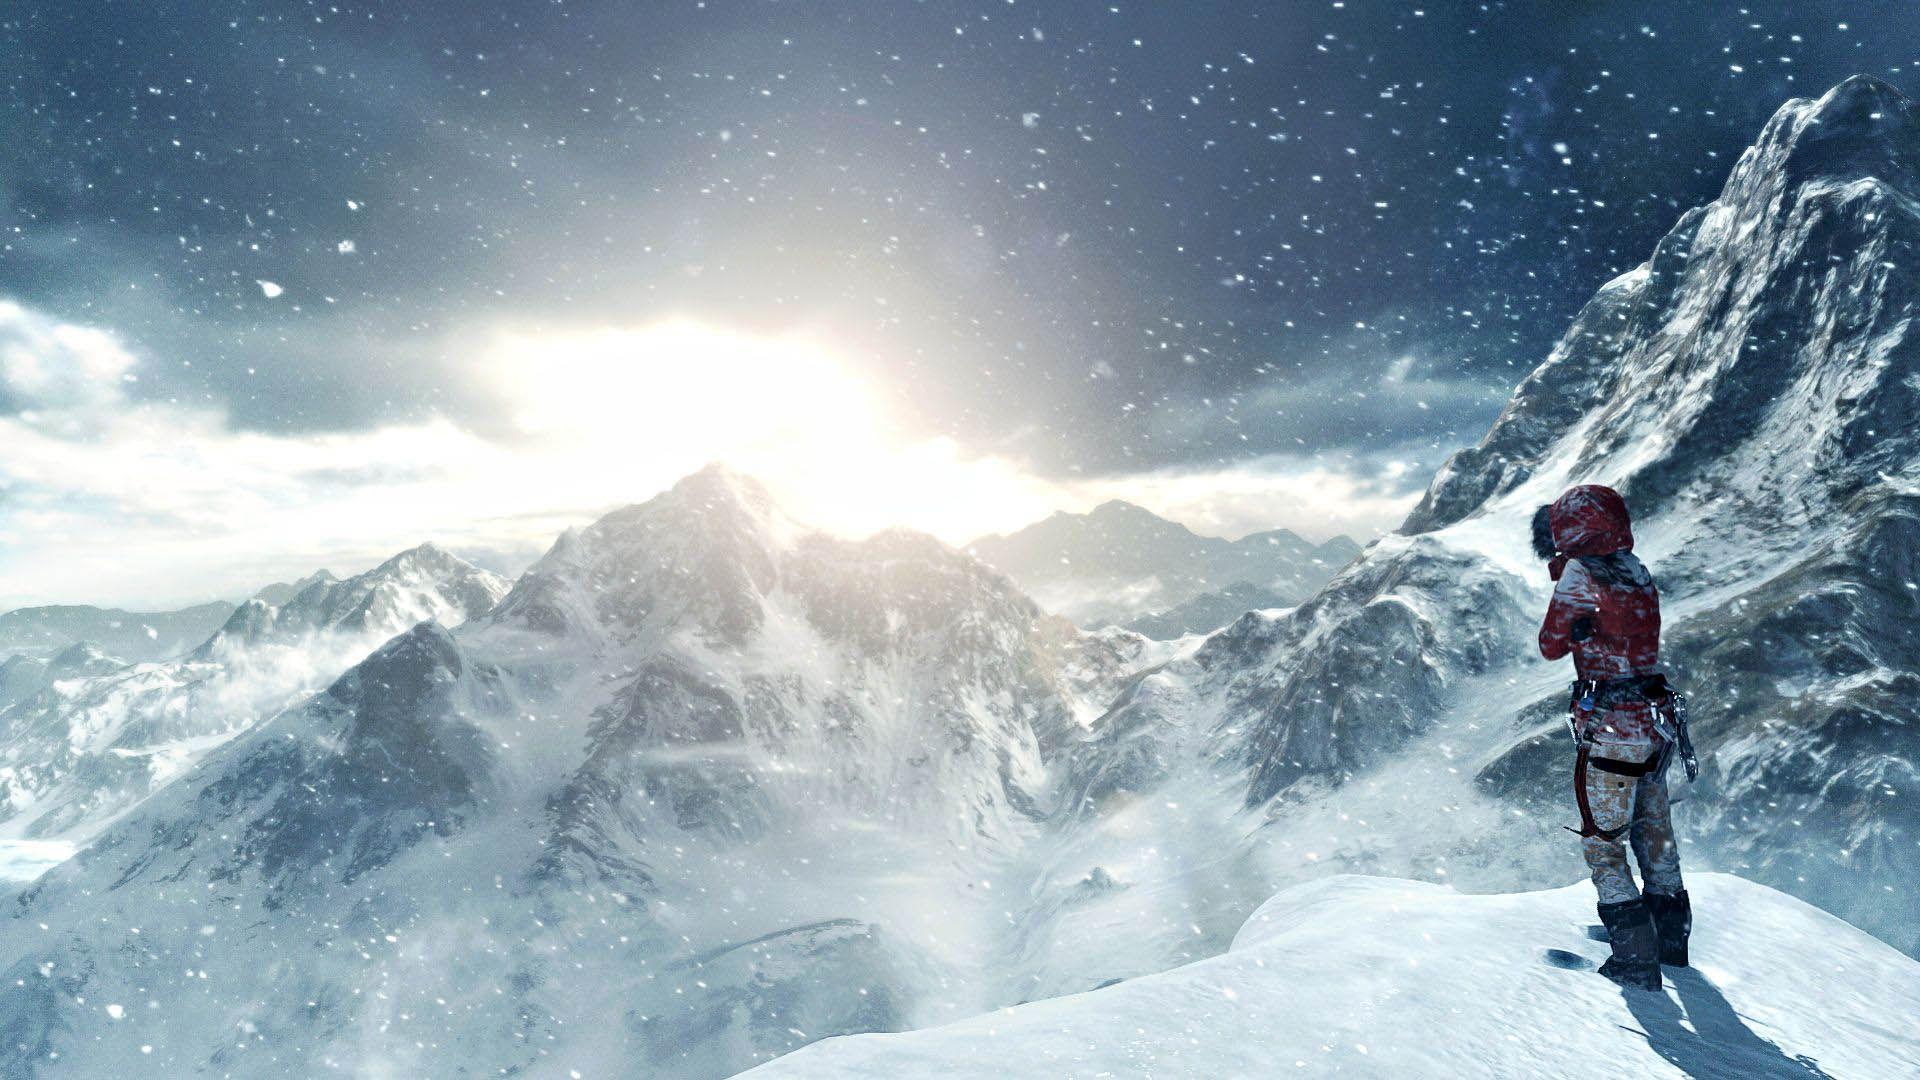 Lara in the Snowy Mountain